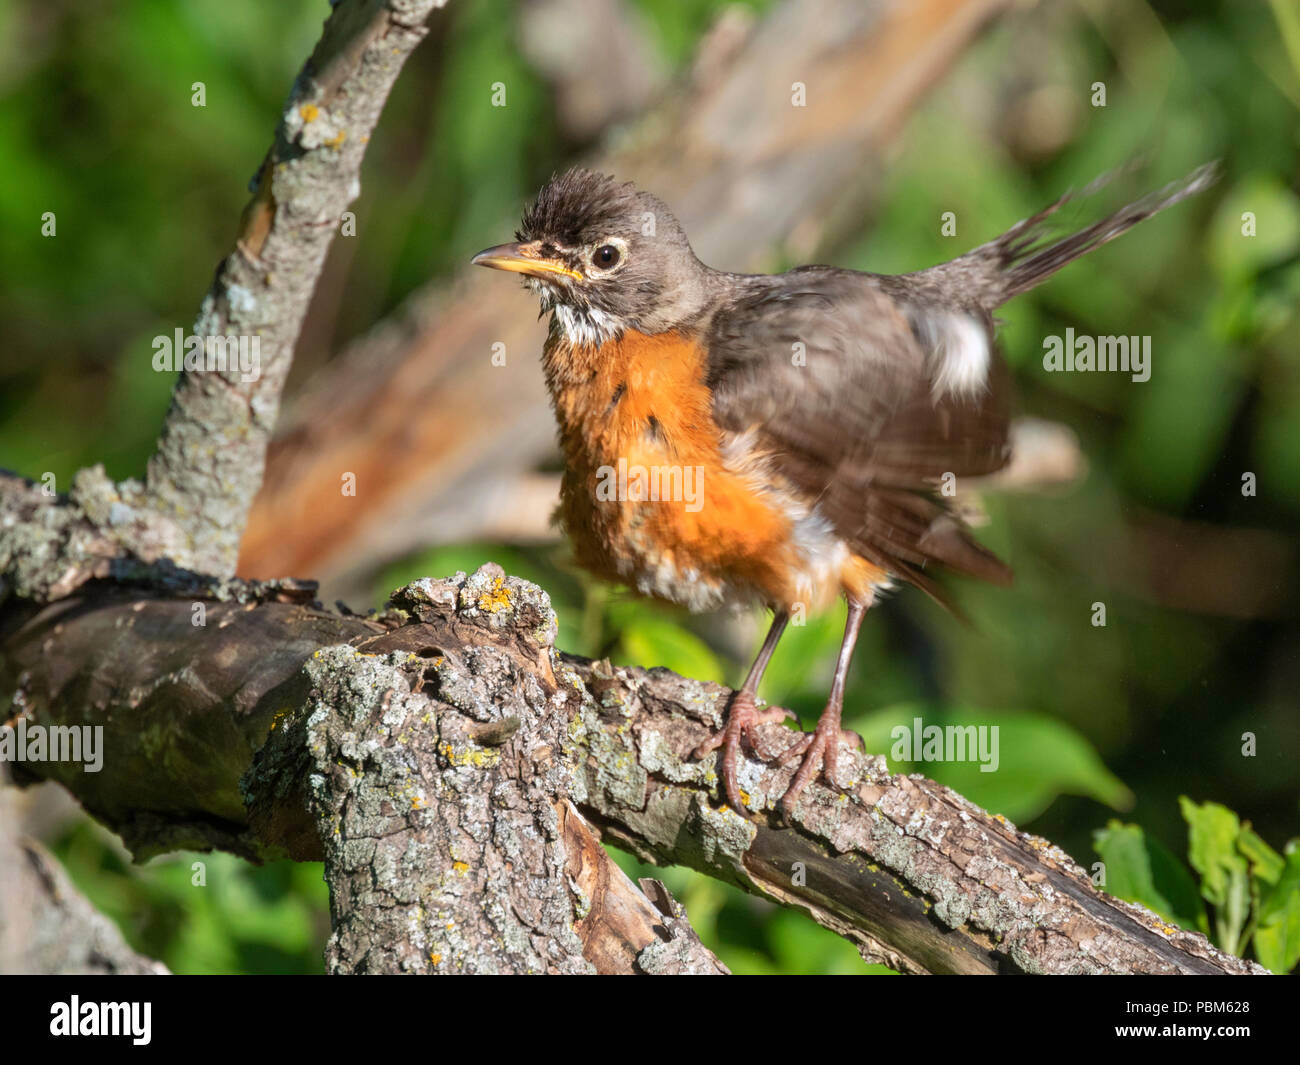 American robin (Turdus migratorius) shaking feathers after bathing, Iowa, USA Stock Photo